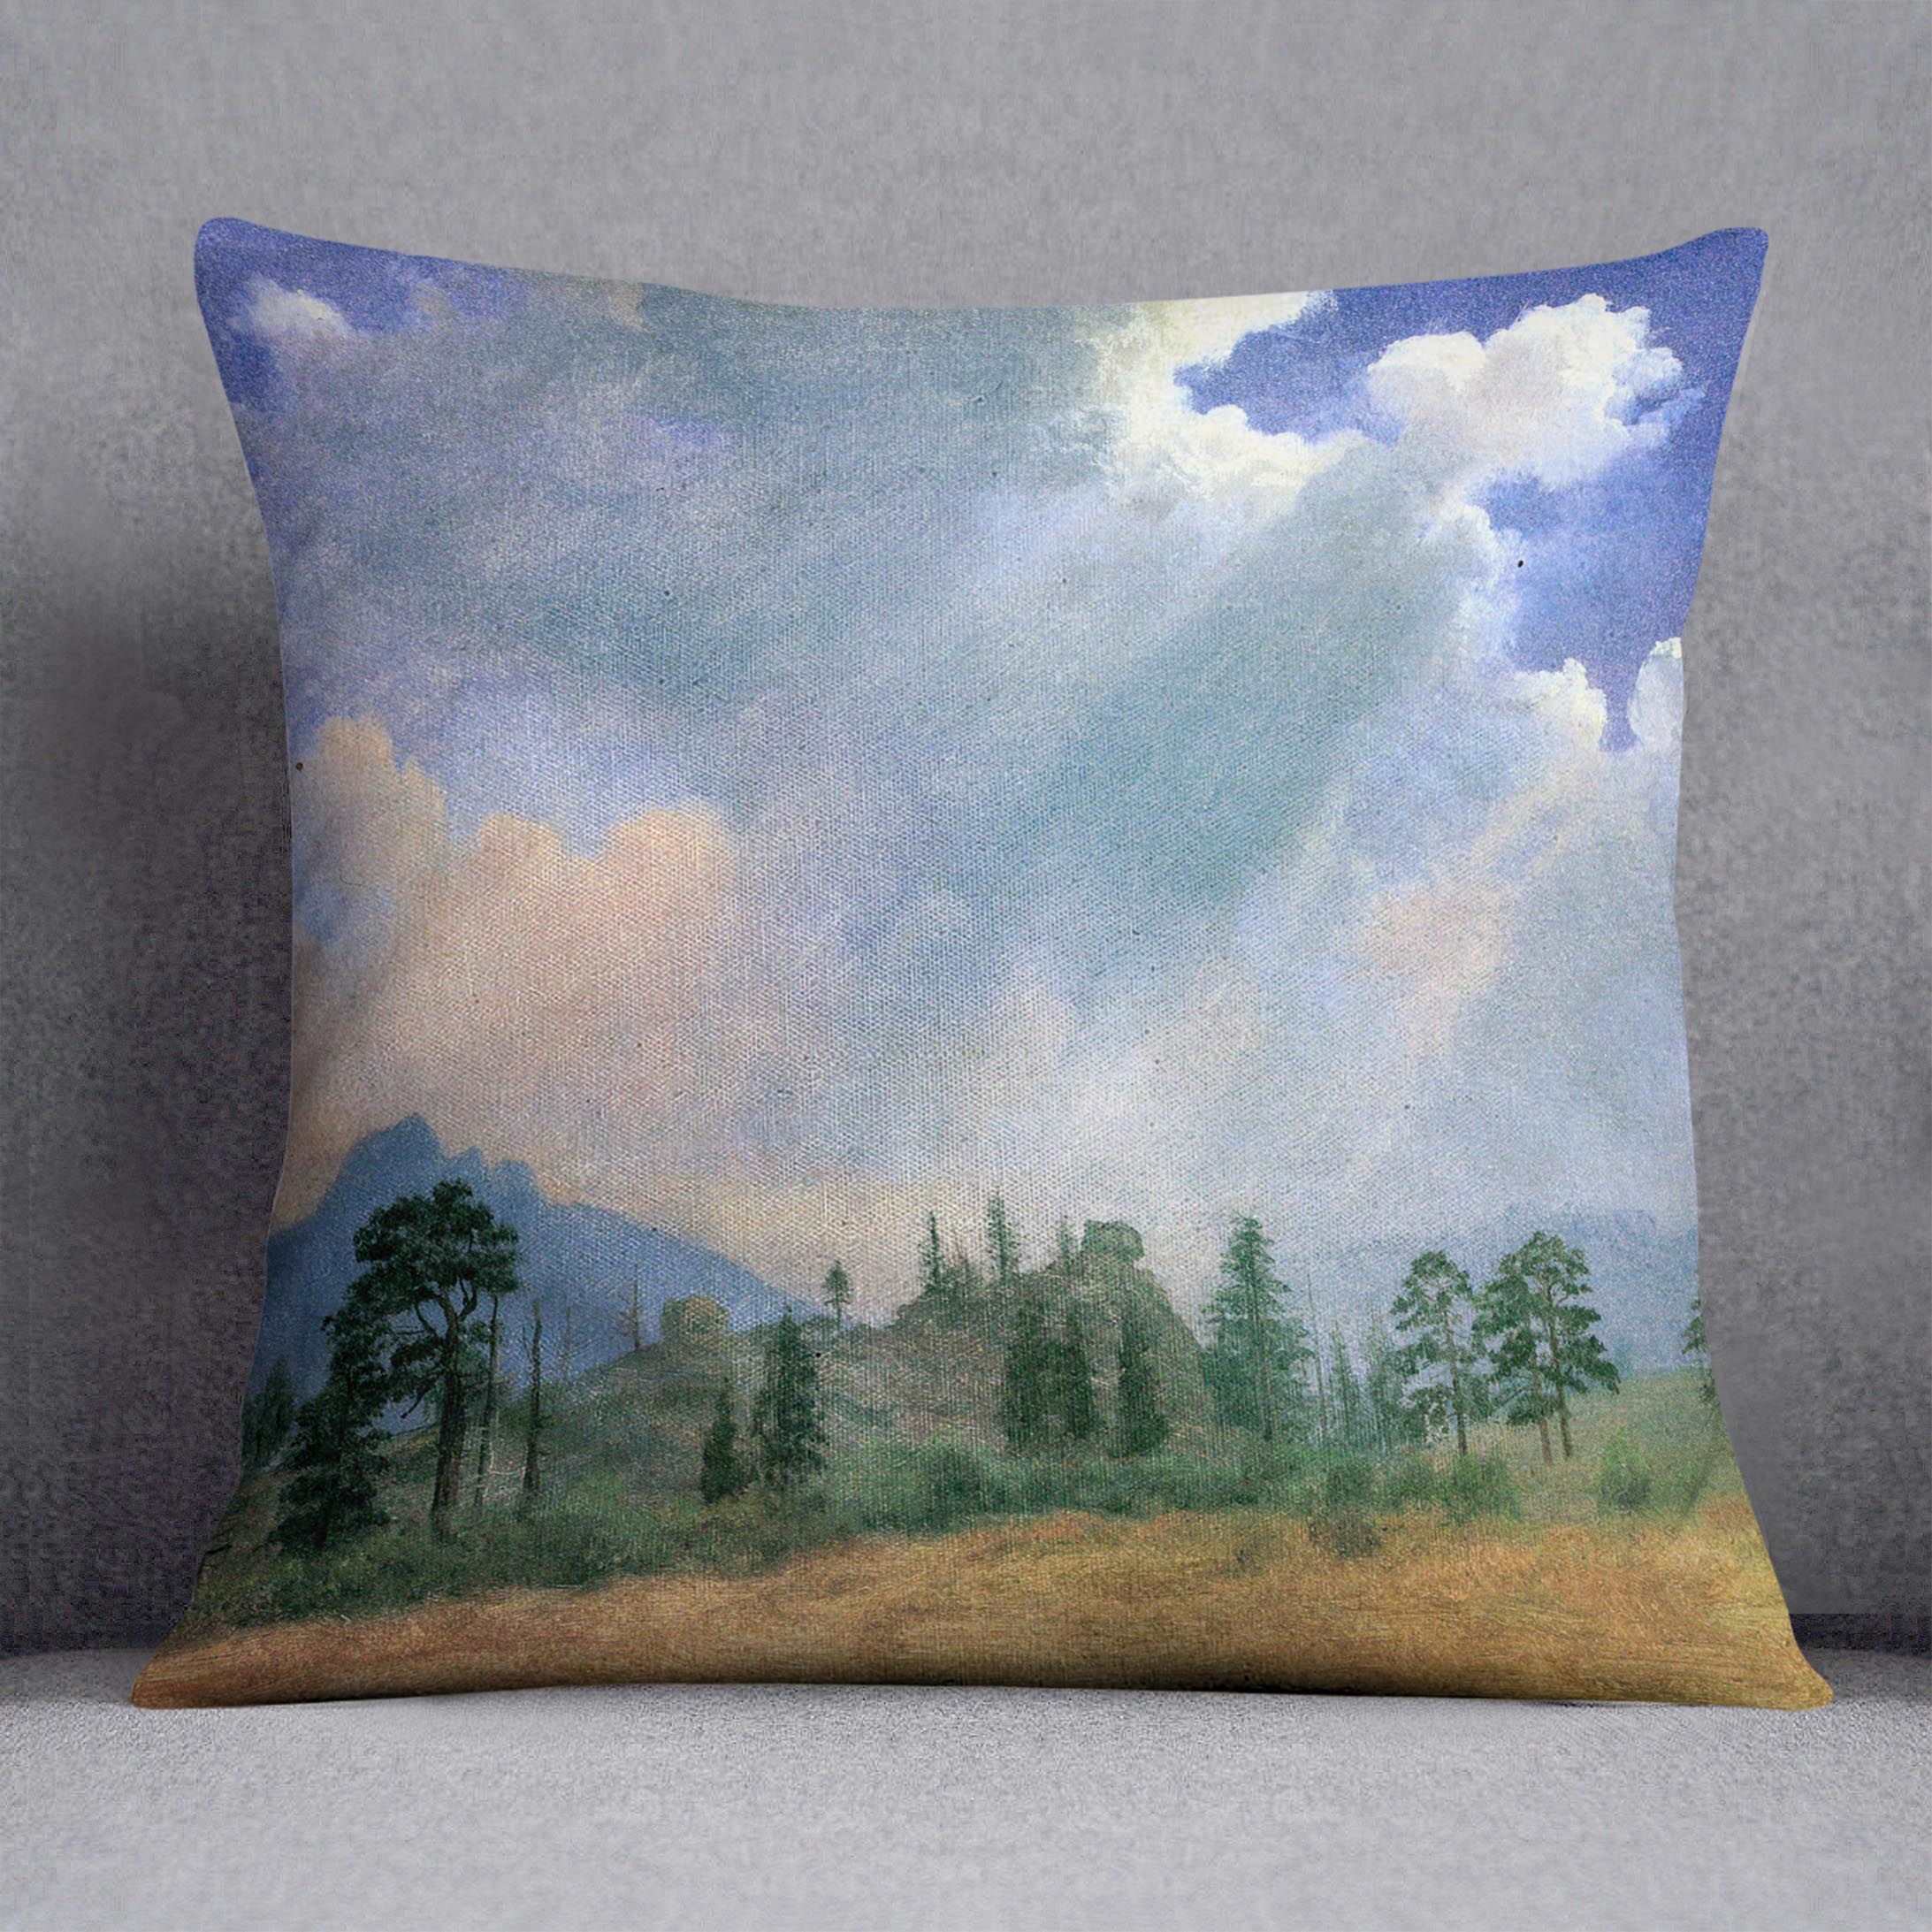 Fir trees and storm clouds by Bierstadt Cushion - Canvas Art Rocks - 1